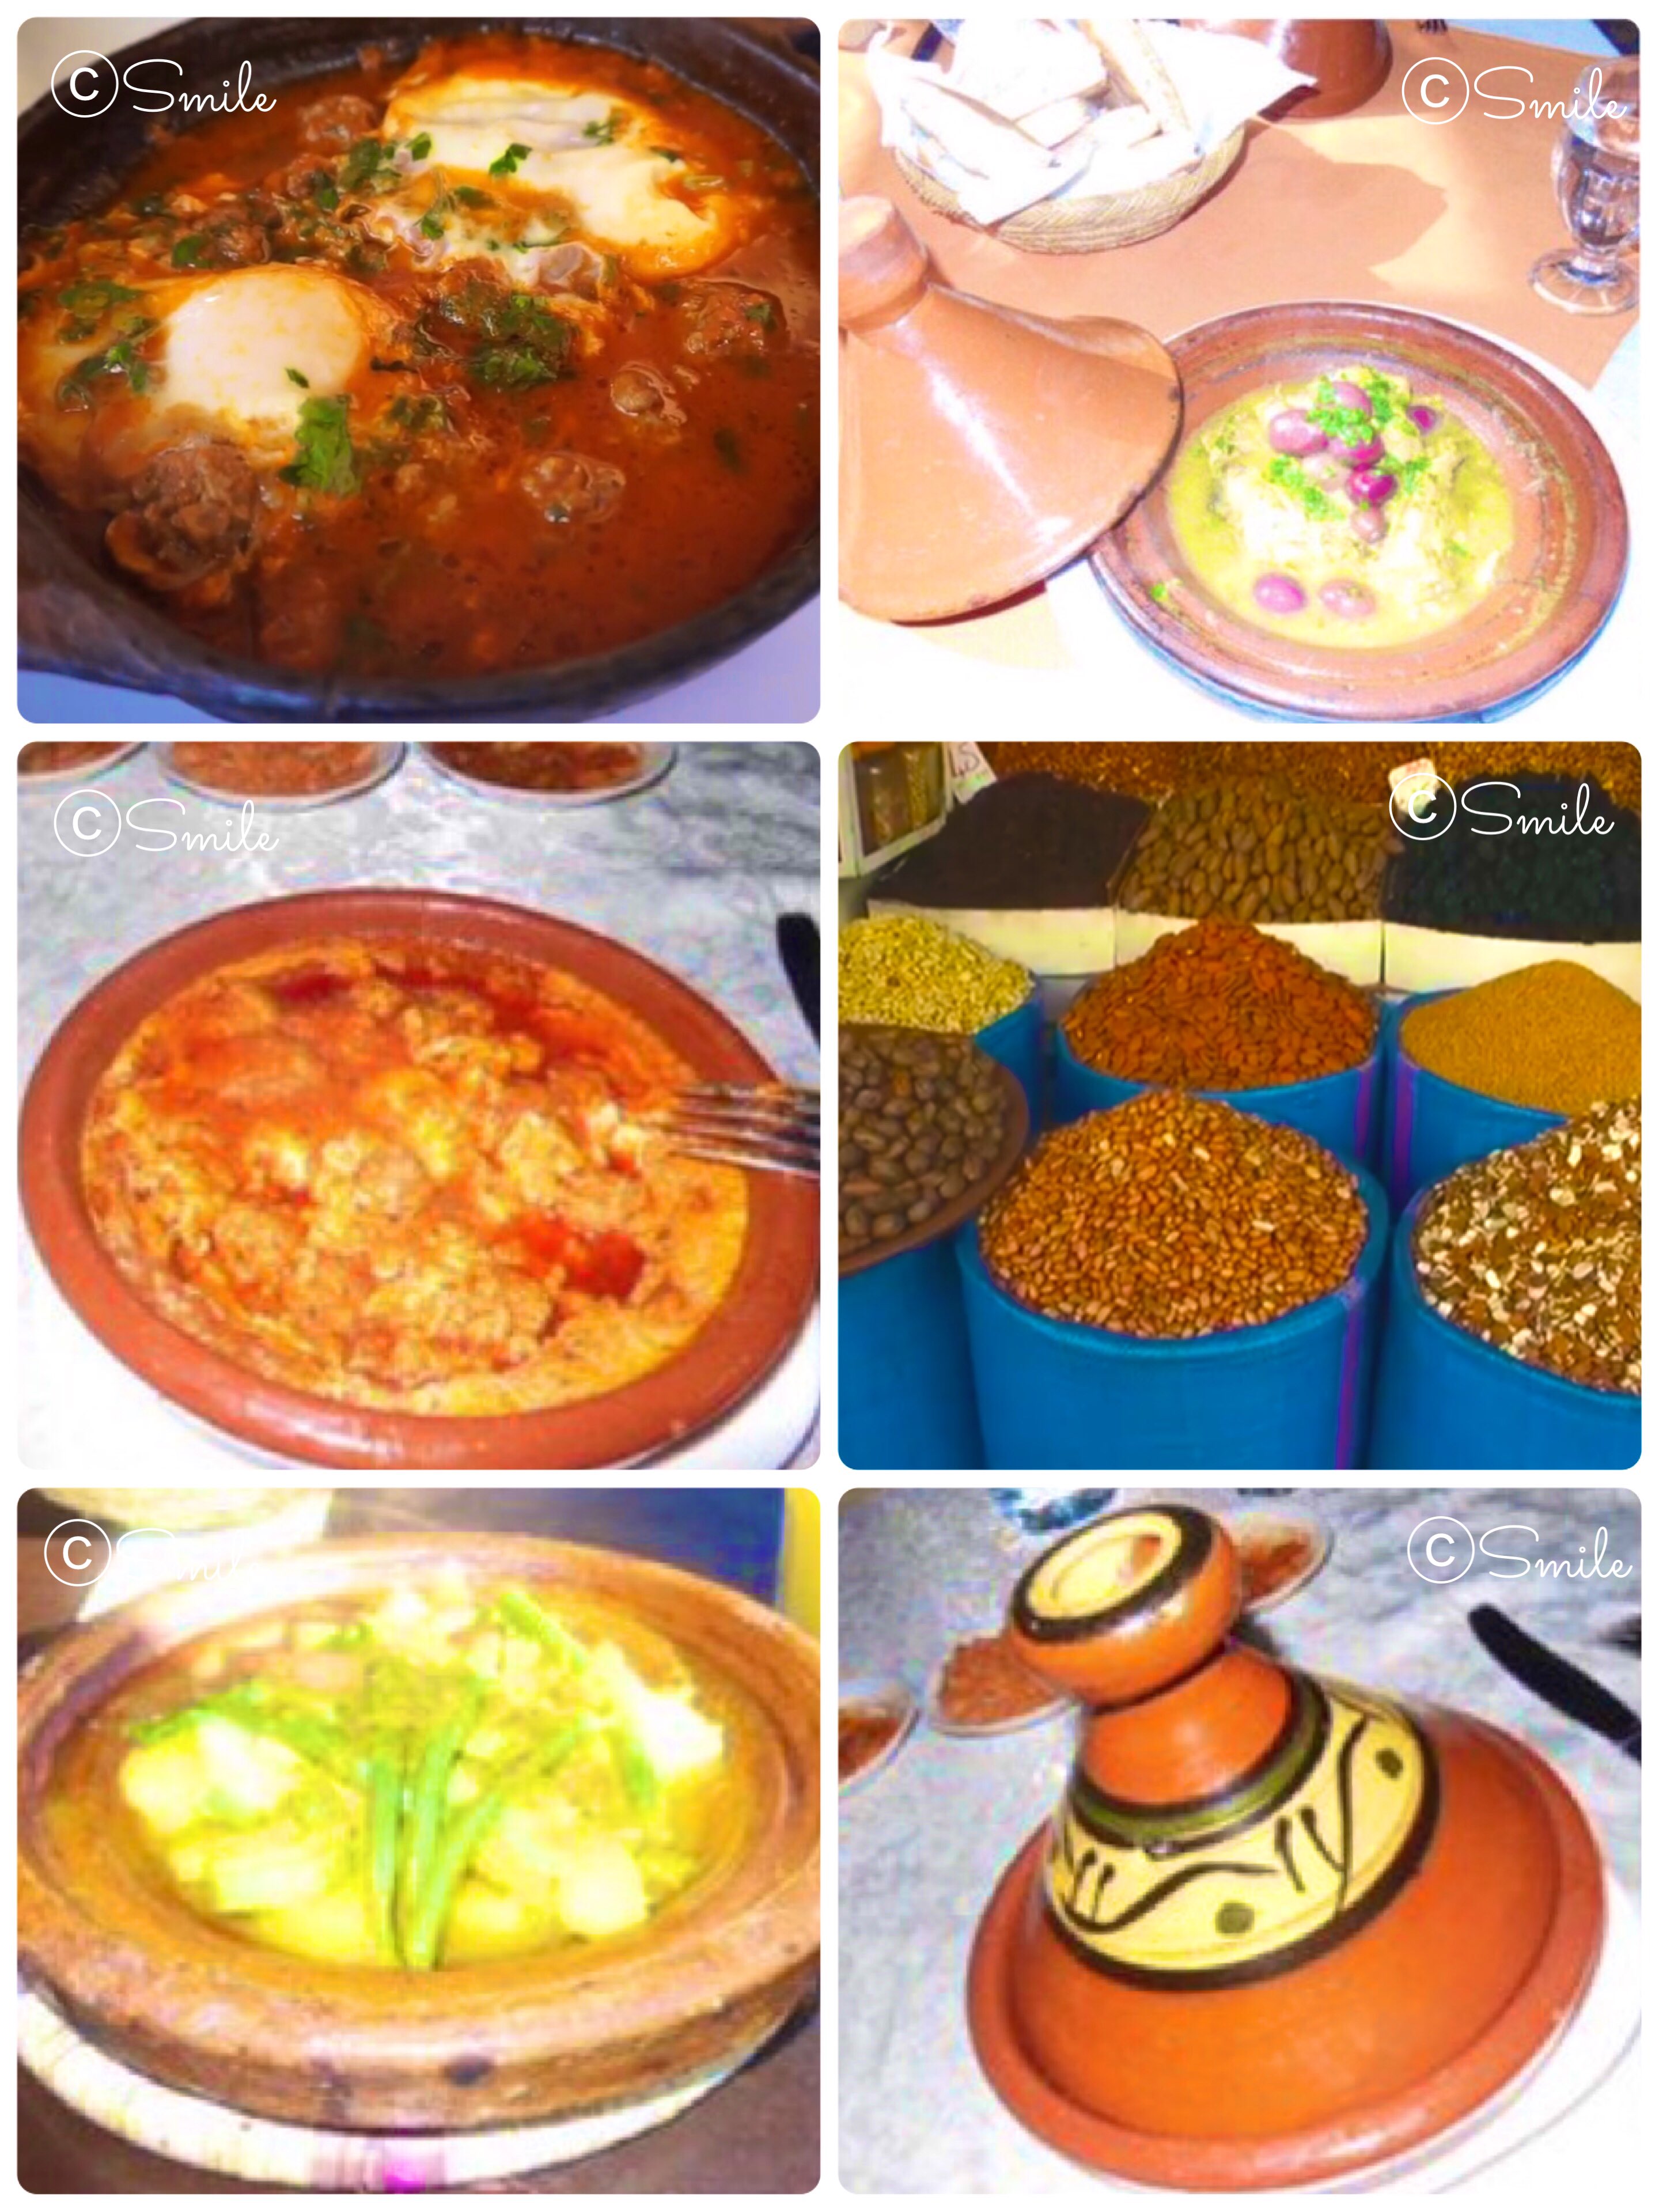 𝕊𝕞𝕚𝕝𝕖 𓅸𓎤𓅯 Morocco Fez モロッコごはん モロッコの代表的な家庭料理 タジン鍋 地域によってスパイスも代わっていて楽しいし美味しいよ モロッコ フェズ 世界遺産 フェズ旧市街 グルメ タジン鍋 海外旅行